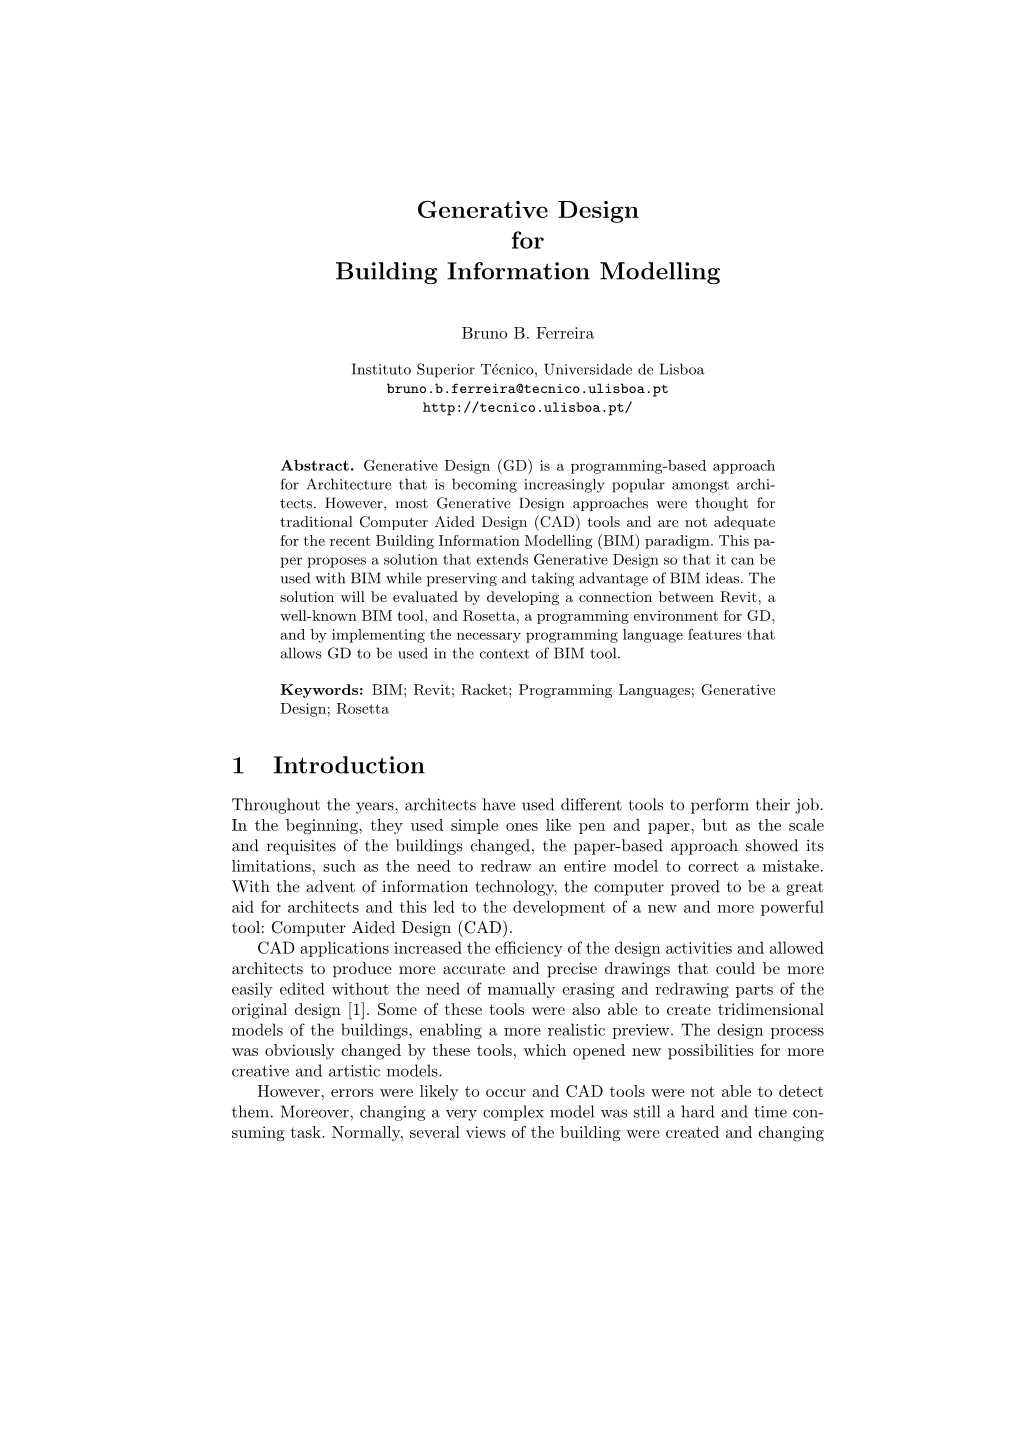 Generative Design for Building Information Modelling 1 Introduction